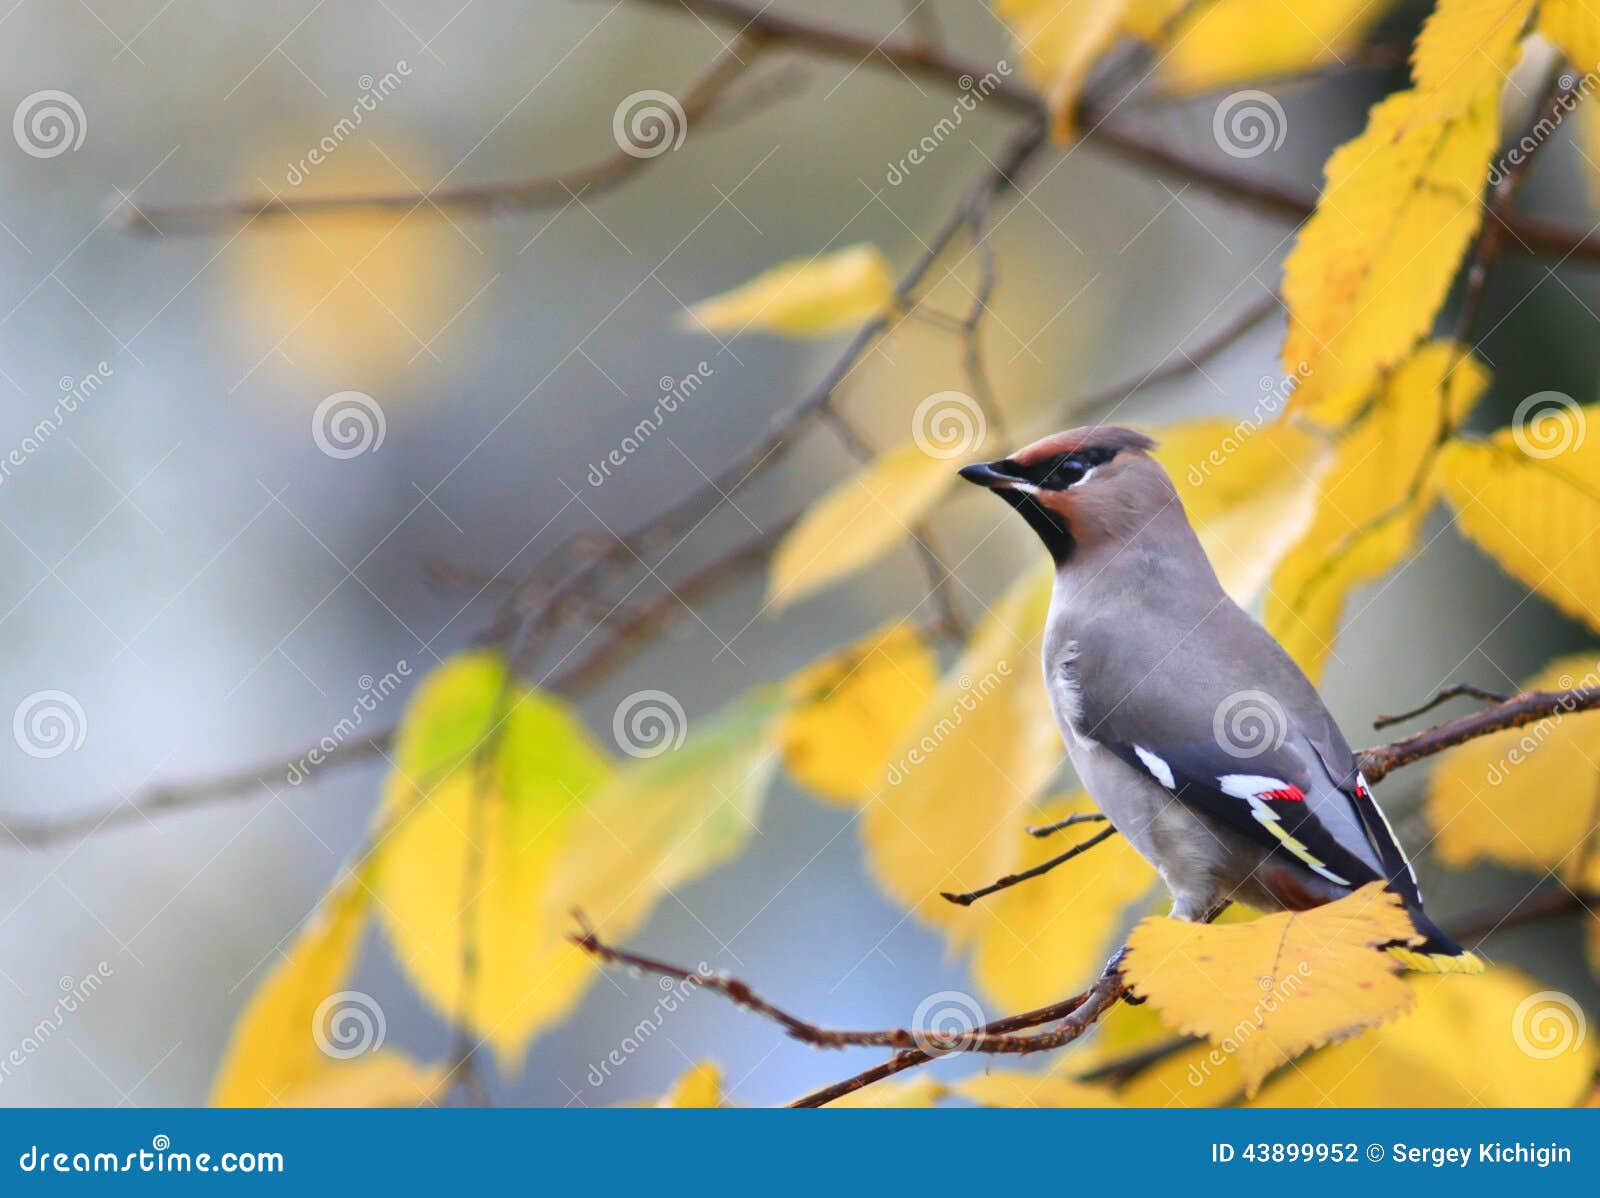 beutifull wild bird in a tree branch